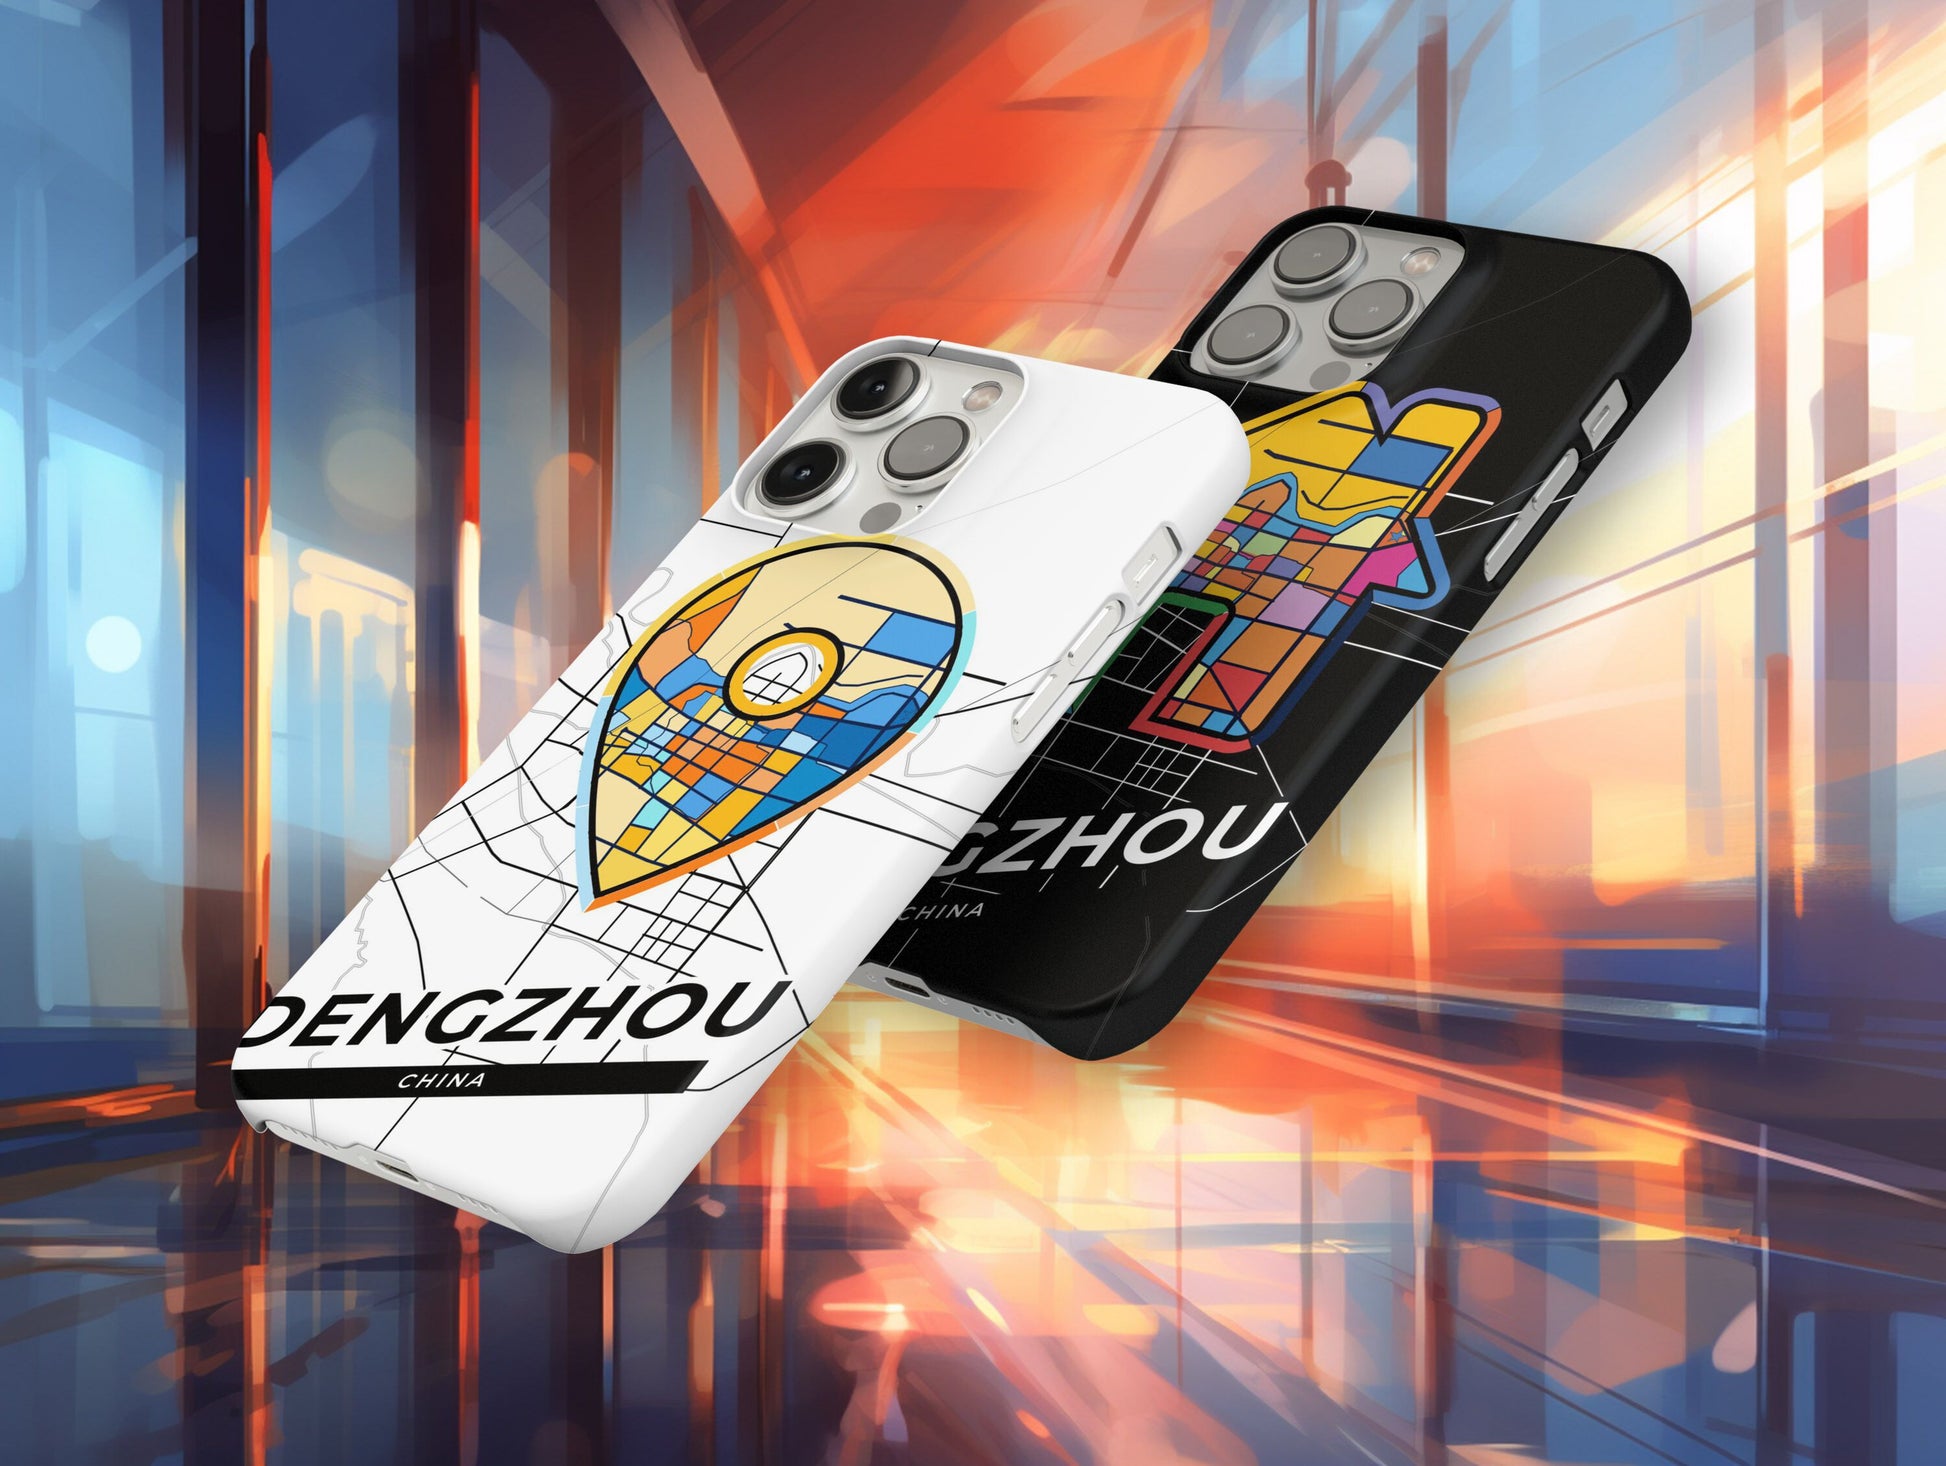 Dengzhou China slim phone case with colorful icon. Birthday, wedding or housewarming gift. Couple match cases.